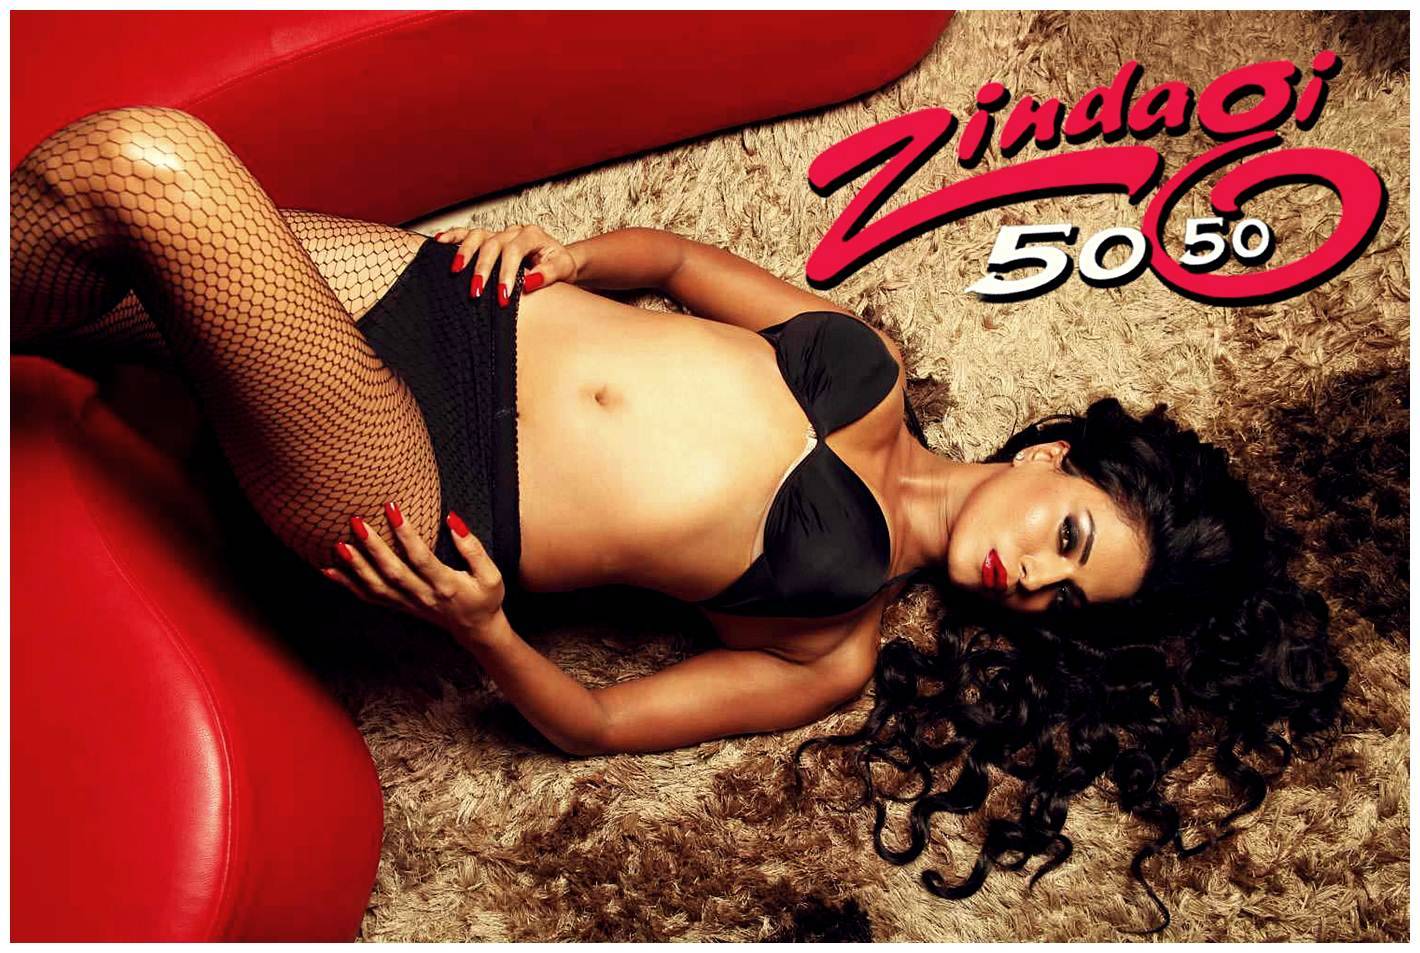 Veena Malik - Veena Malik Steamy and Smoking Hot Photoshoot for Zindagi 50-50 | Picture 448340